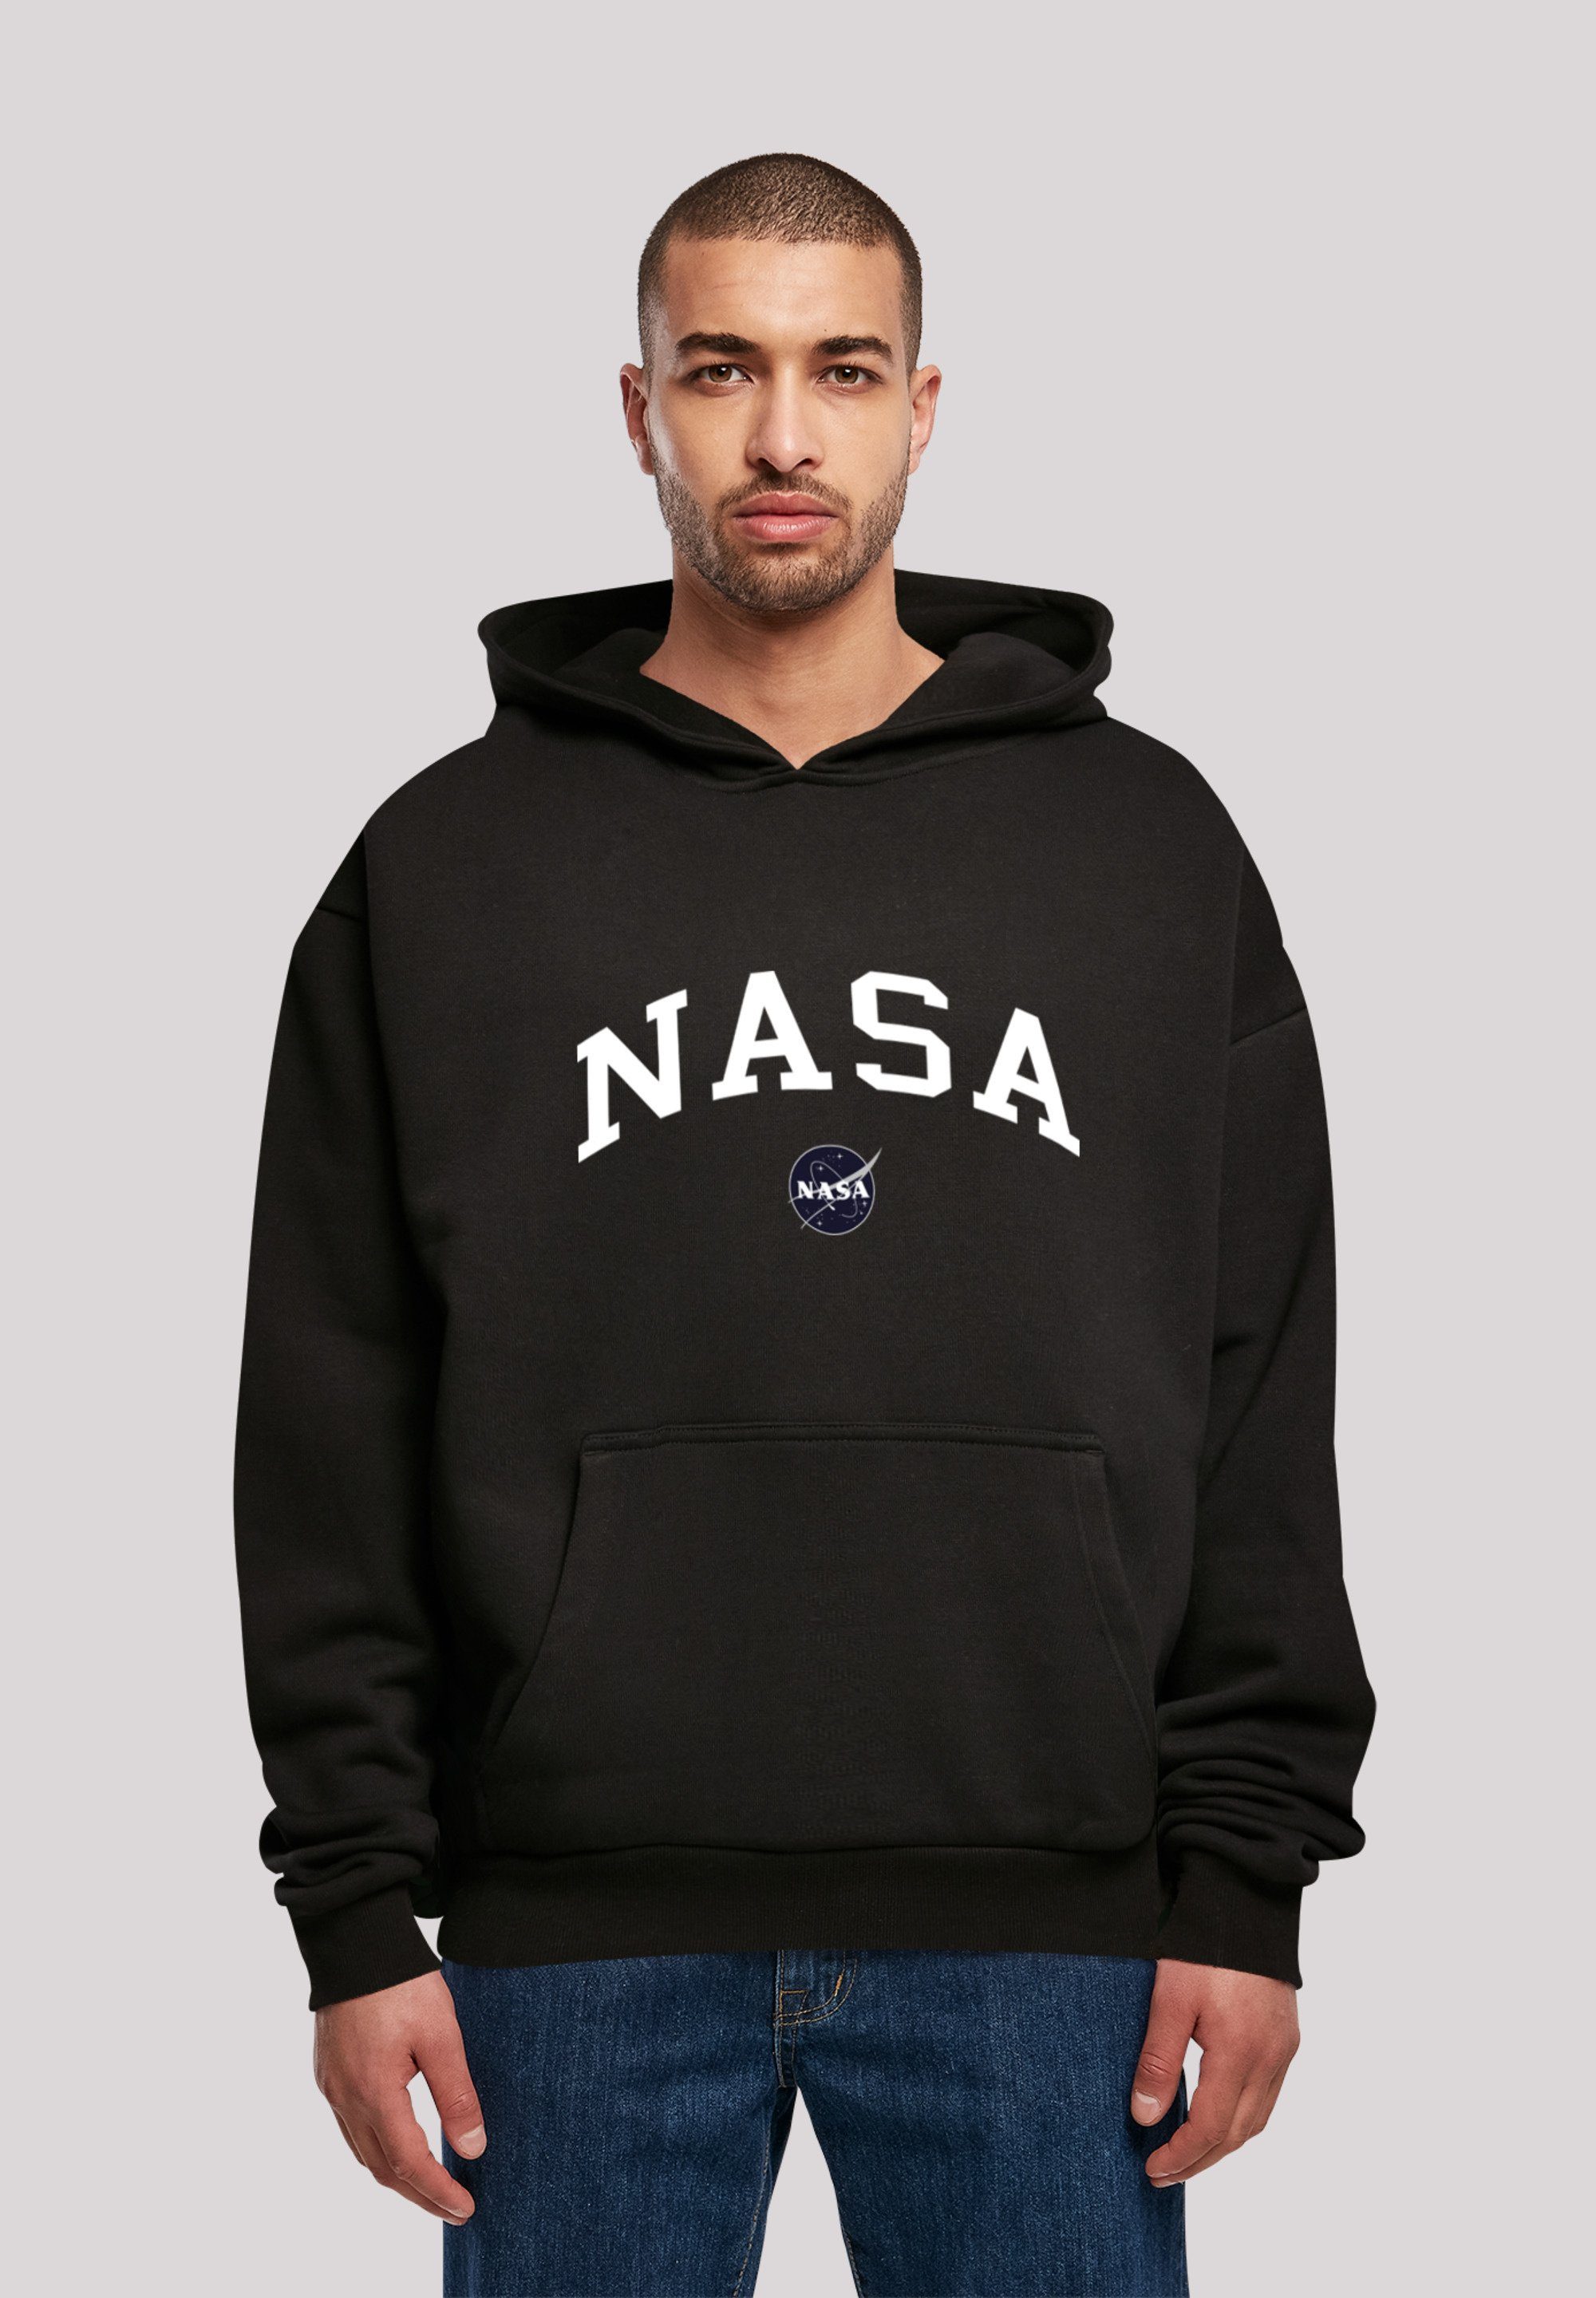 F4NT4STIC Sweatshirt Premium Oversize Print Collegiate NASA Logo